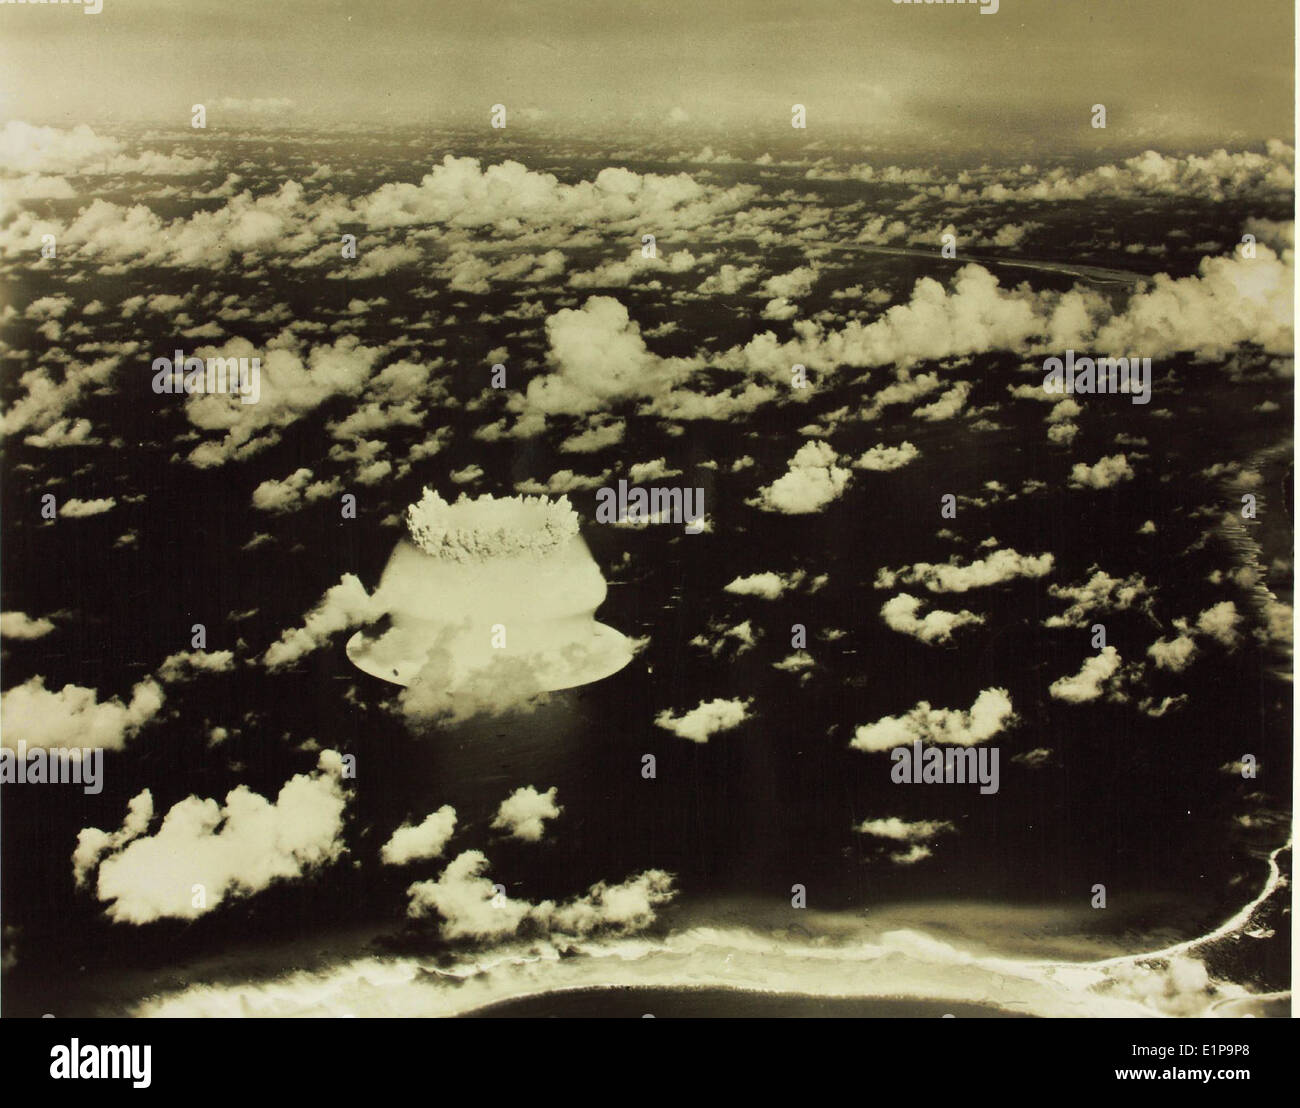 Atomic Bomb Test Stock Photo